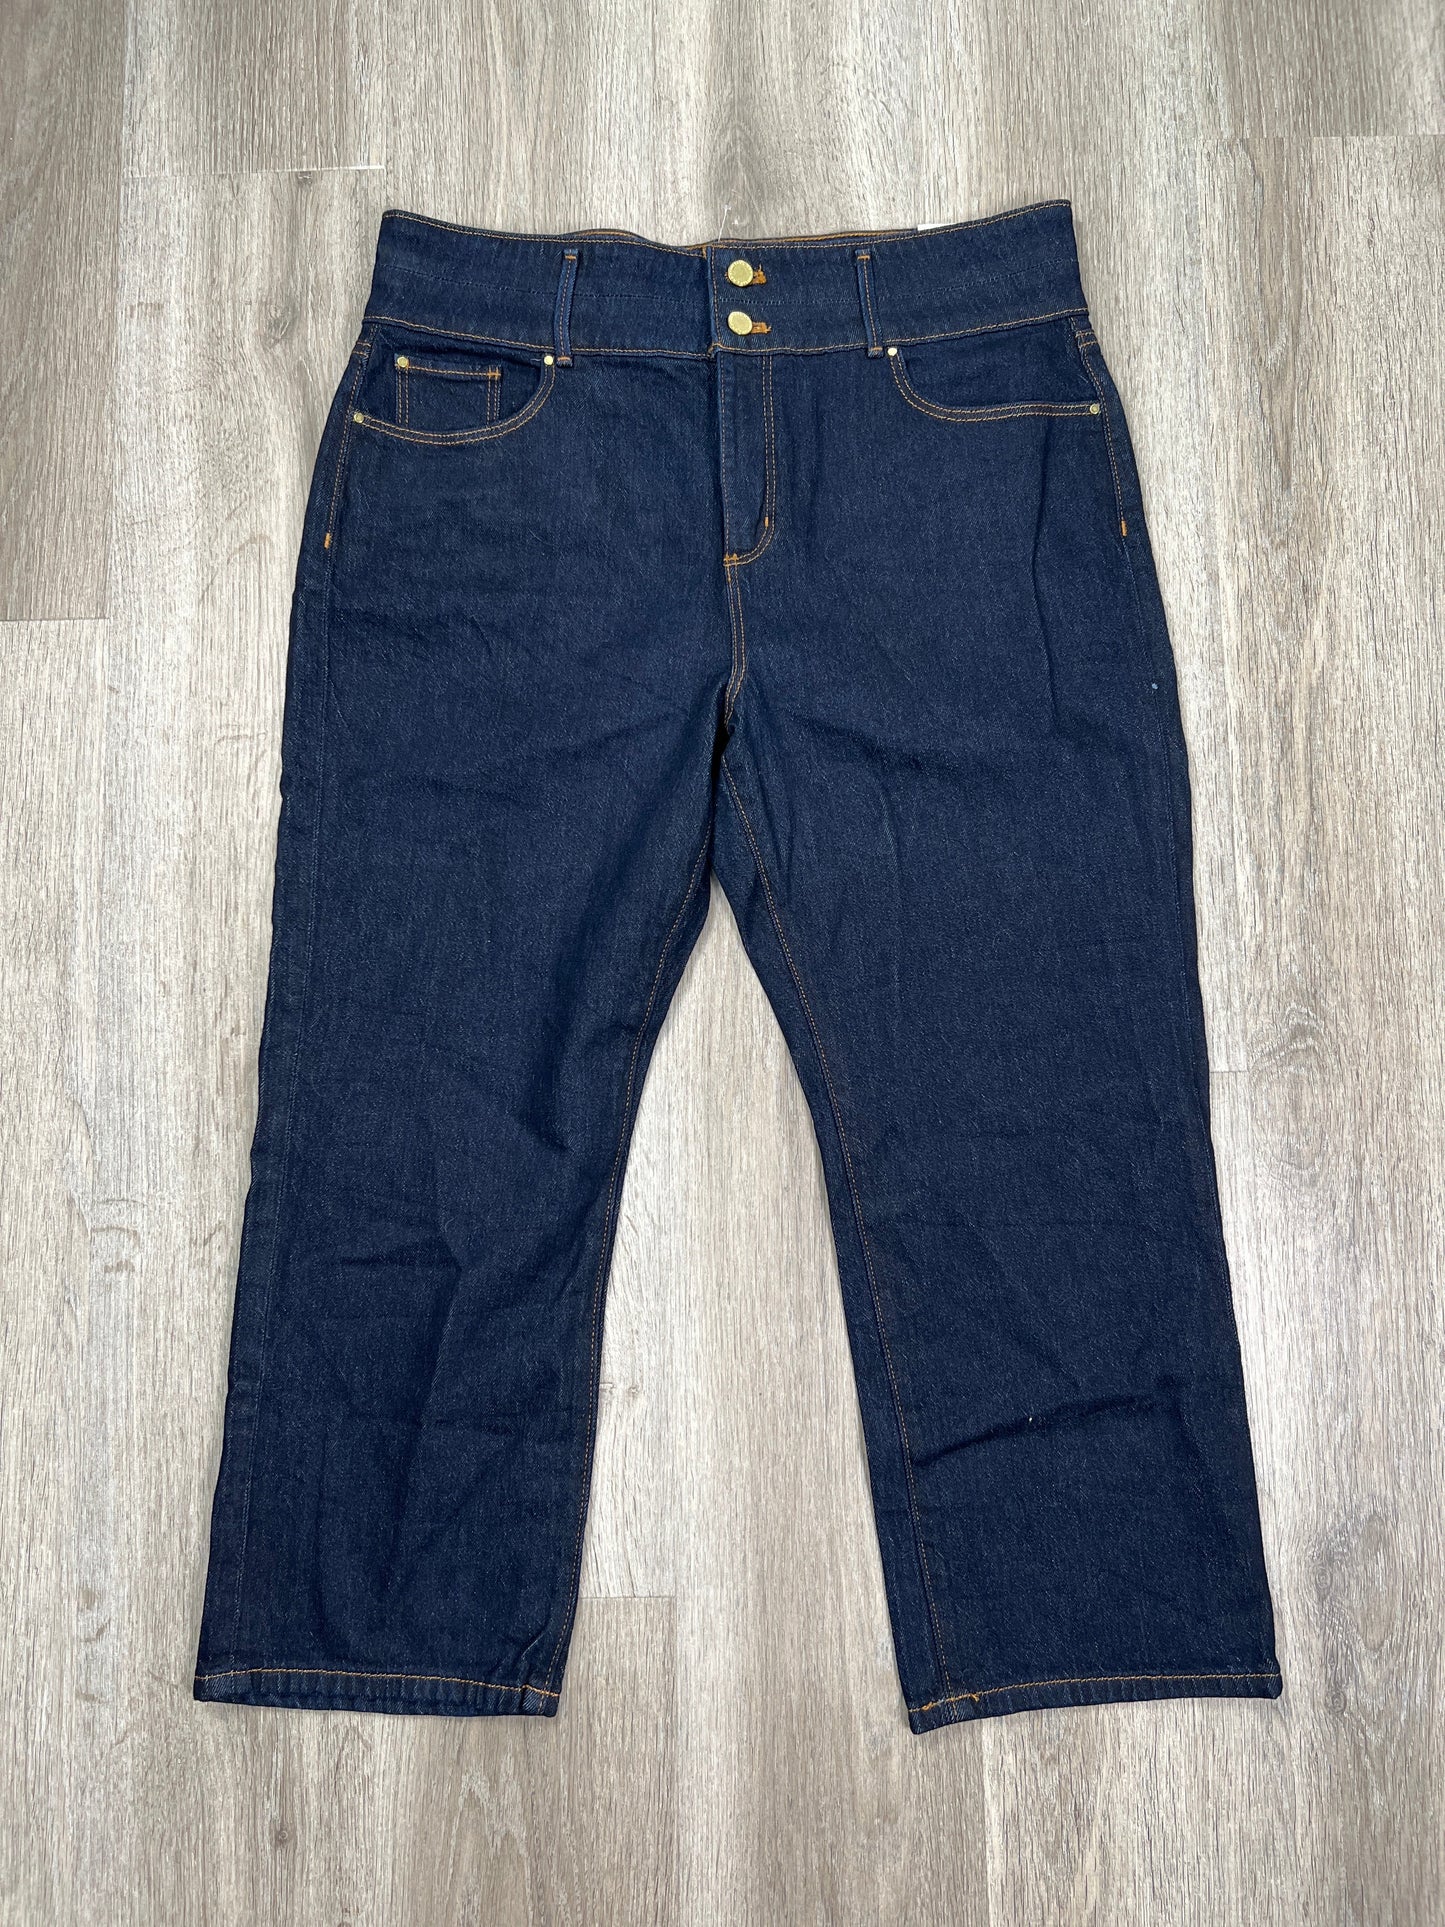 Blue Denim Jeans Cropped Ann Taylor, Size 14petite